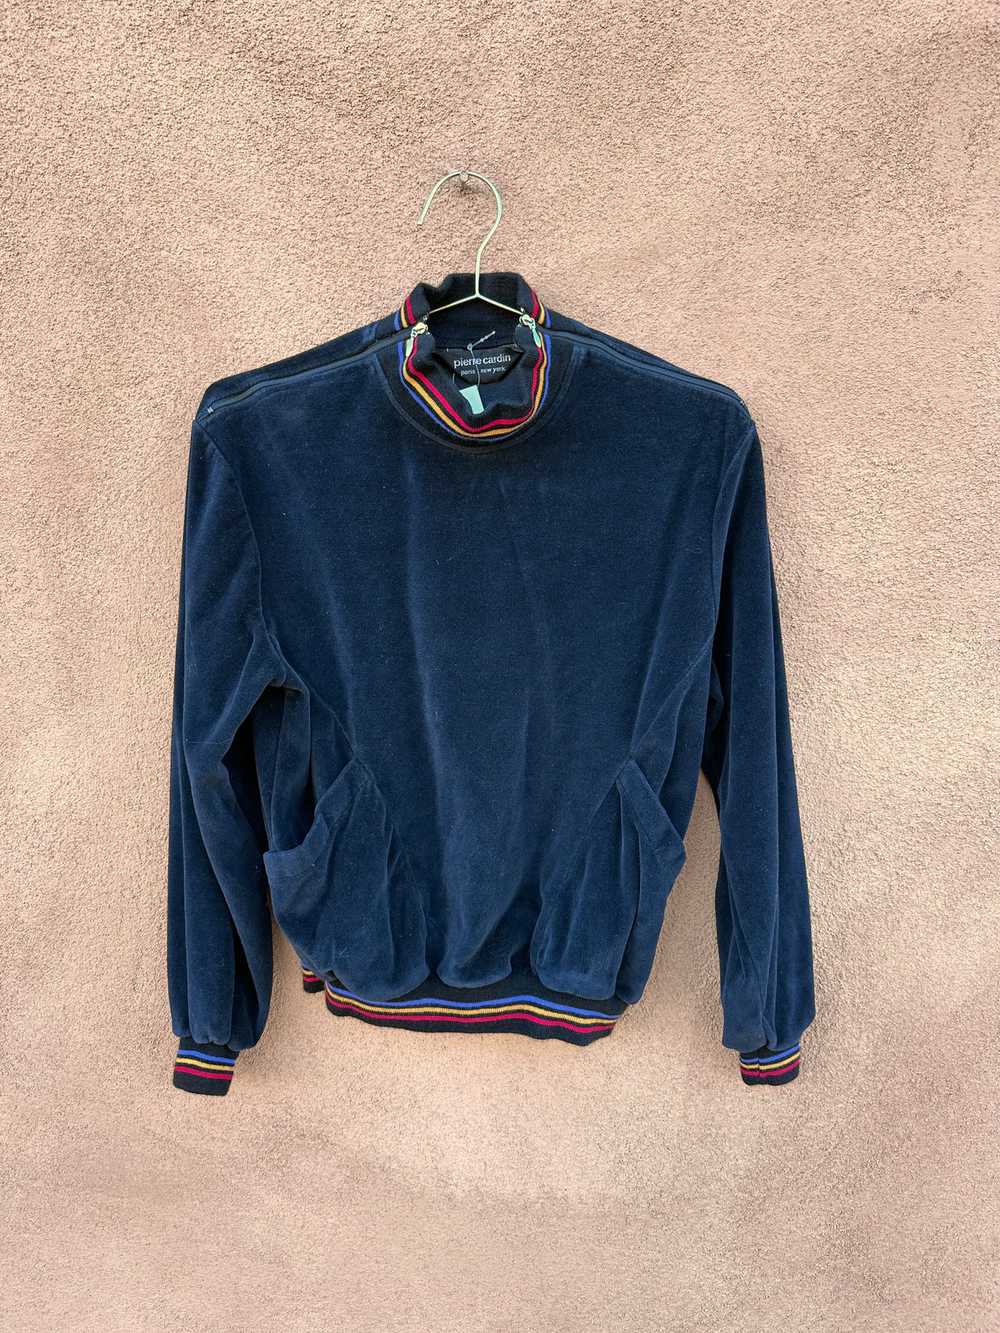 Pierre Cardin Velveteen Sweatshirt with Pockets - image 1